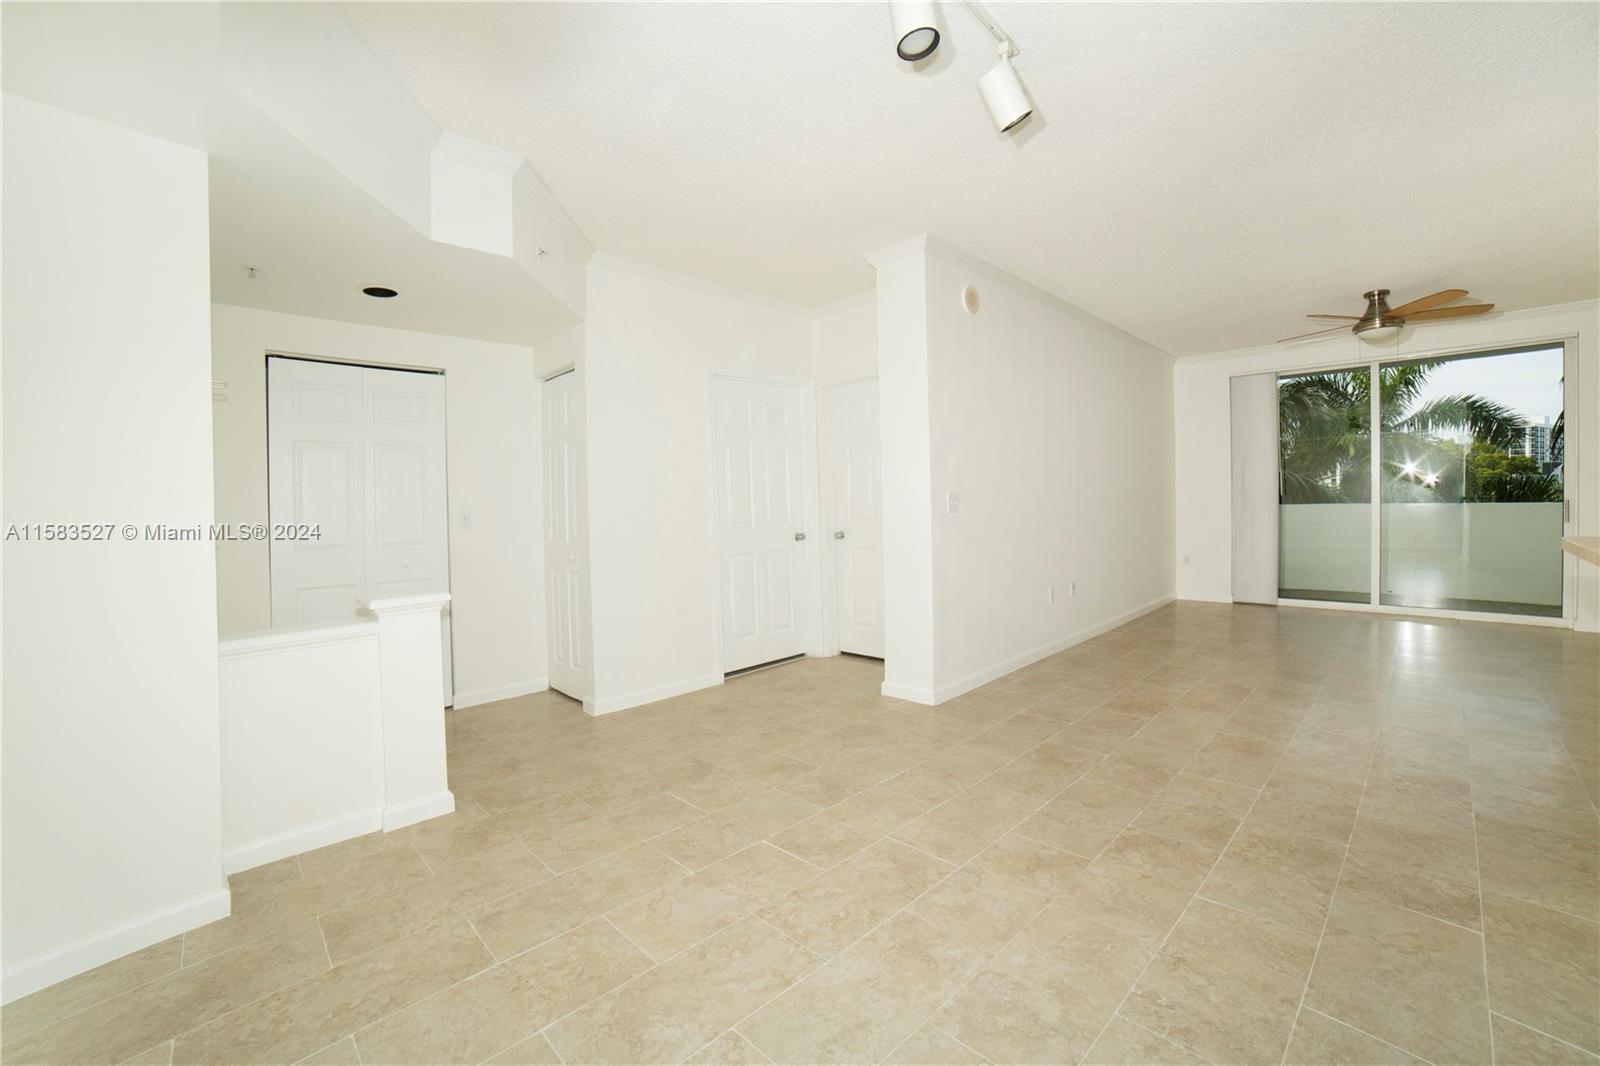 Rental Property at 17150 N Bay Rd 2313, Sunny Isles Beach, Miami-Dade County, Florida - Bedrooms: 2 
Bathrooms: 2  - $2,950 MO.